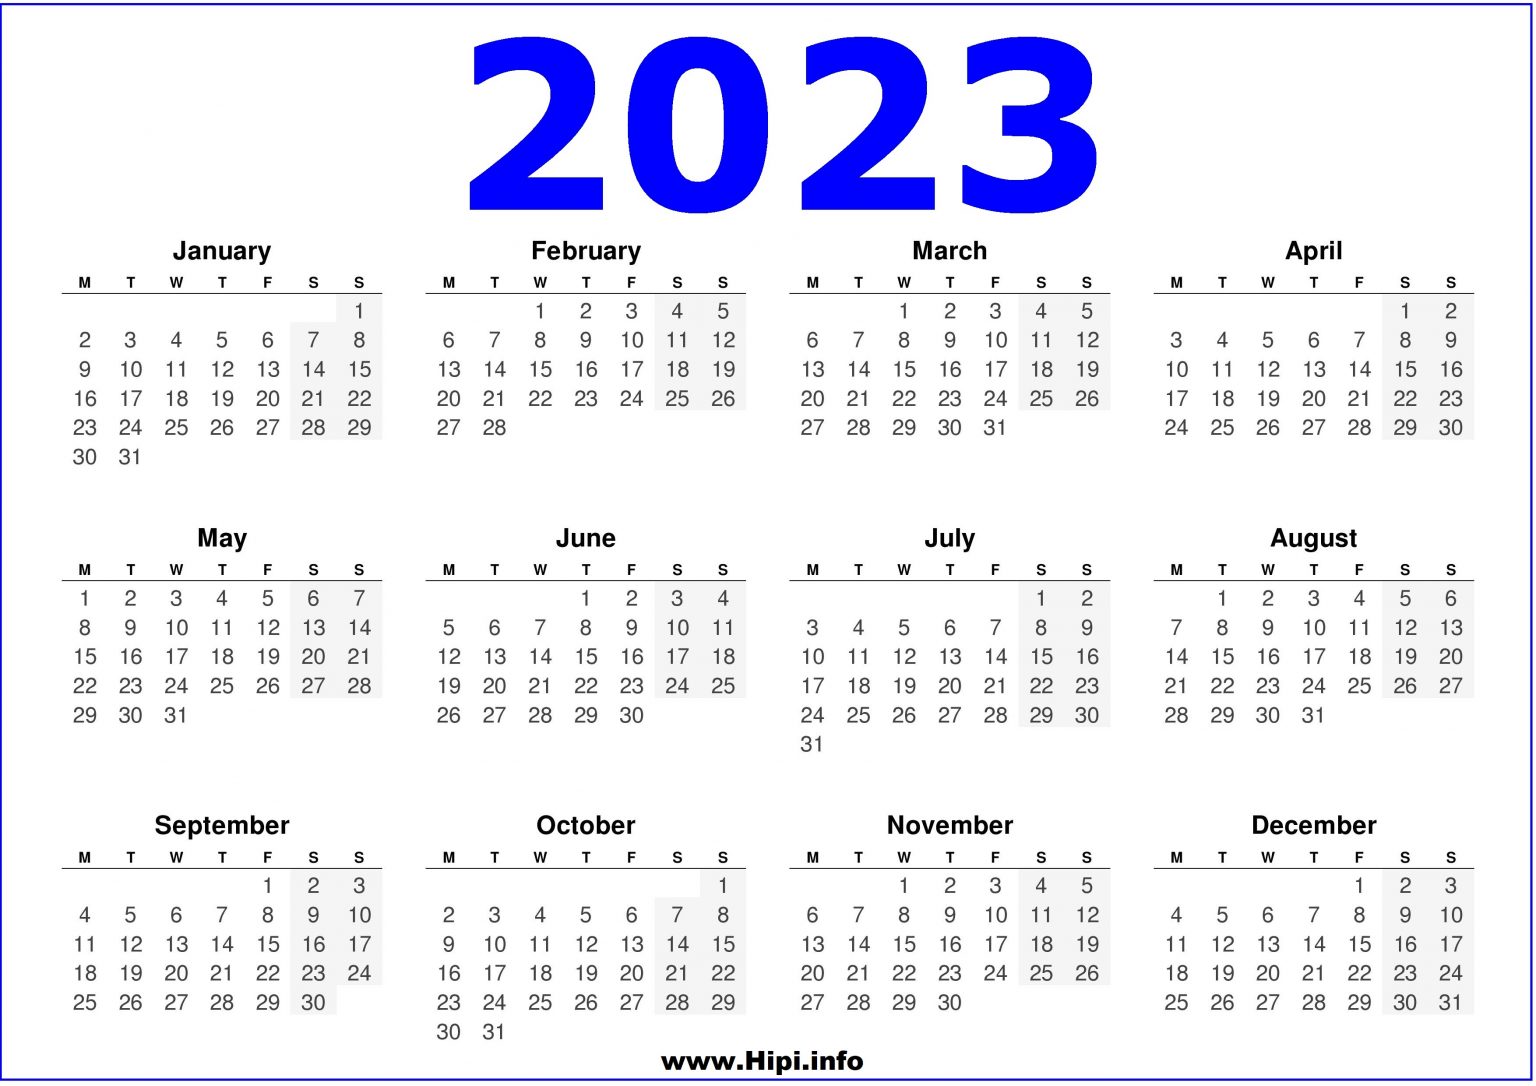 2023-calendars-archives-hipi-info-calendars-printable-free